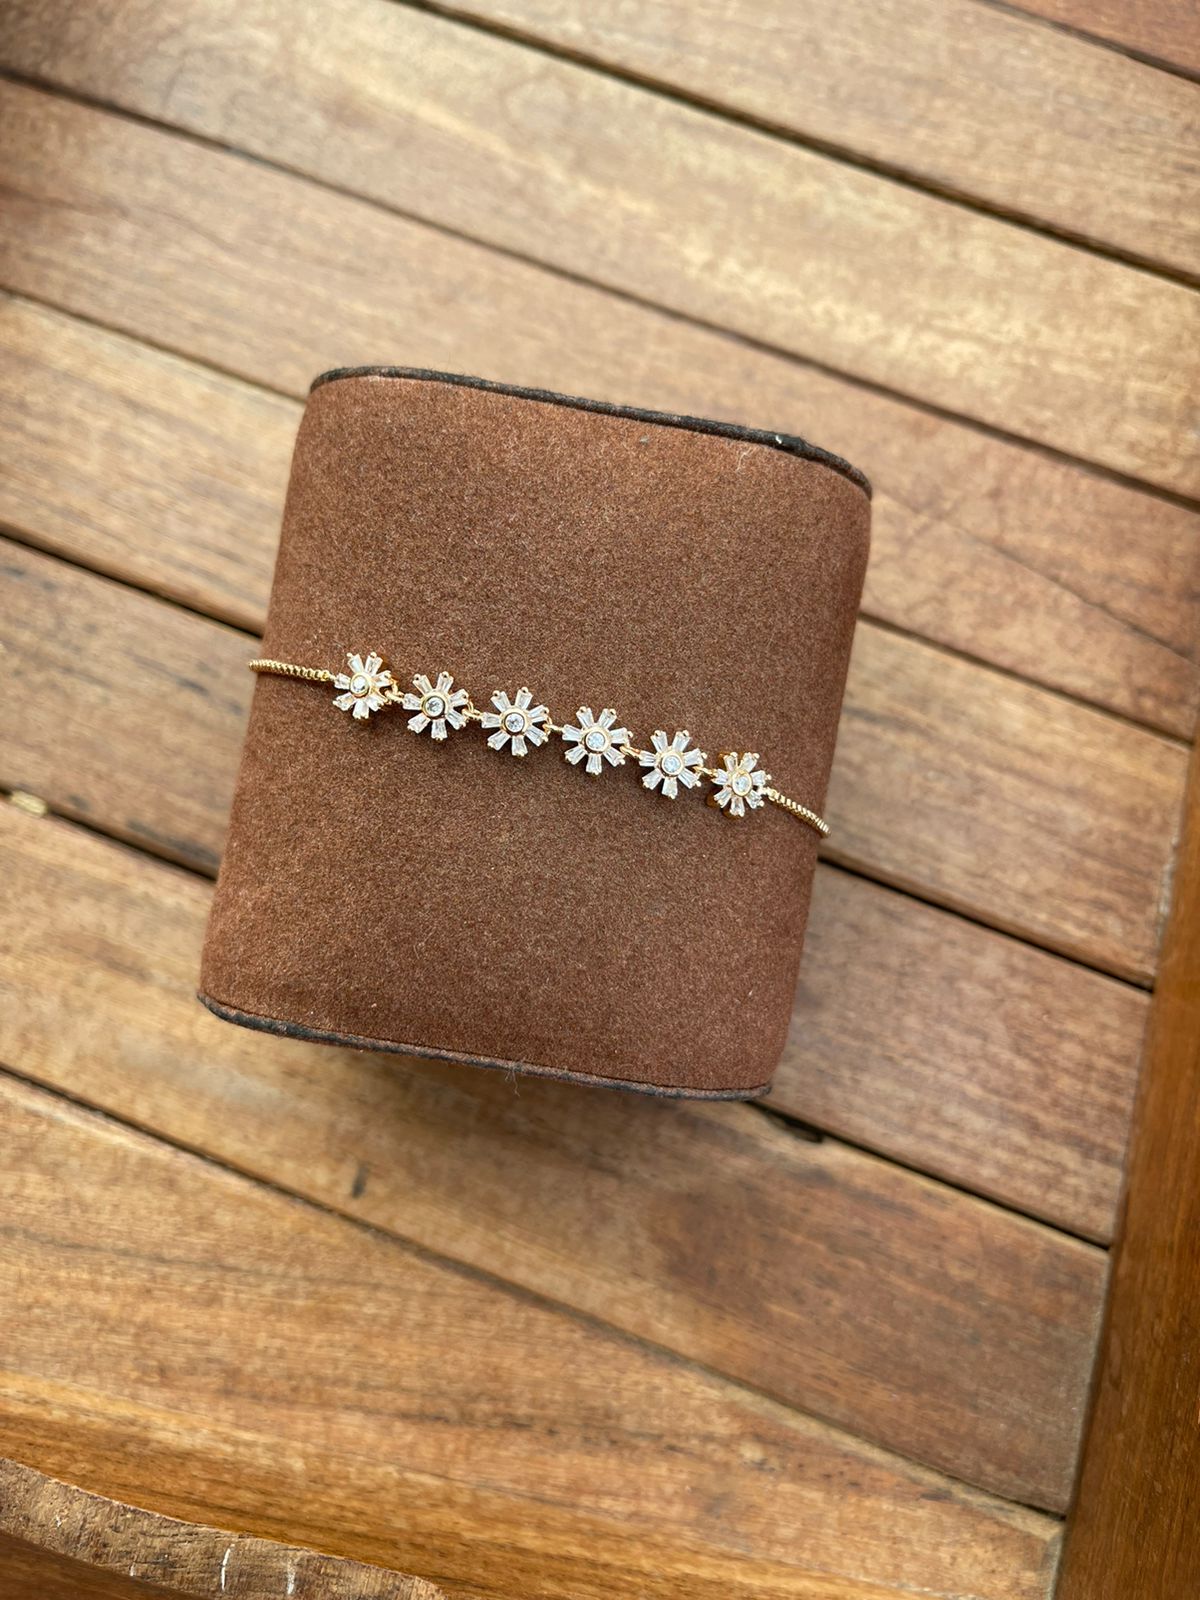 Six flower adjustable rosegold bracelet - Alluring Accessories